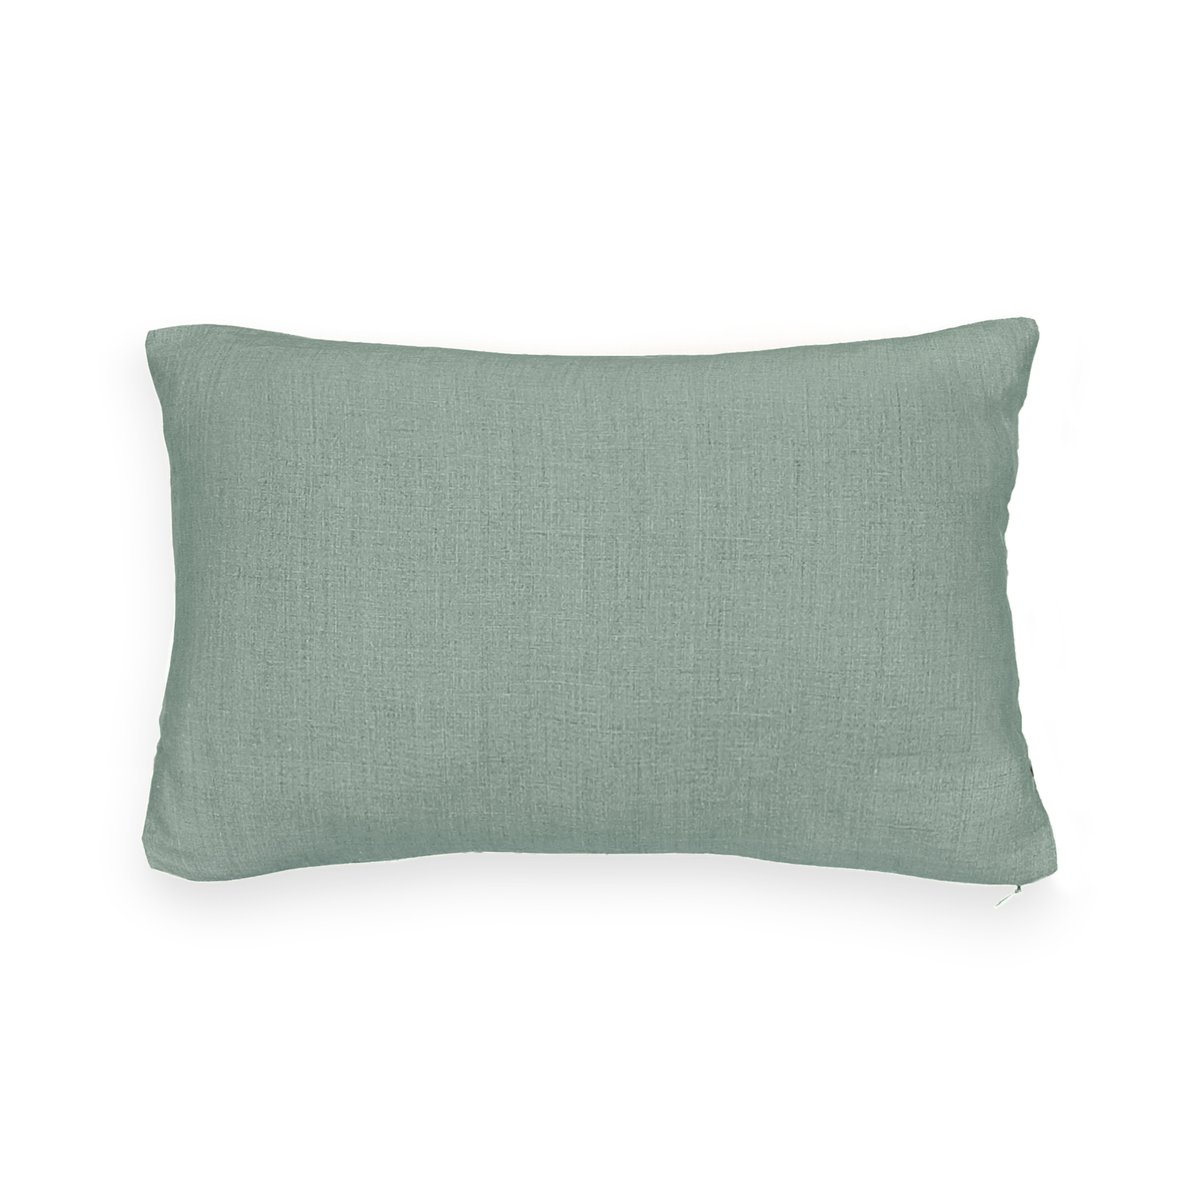 Чехол La Redoute На подушку-валик из стираного льна ONEGA 50 x 30 см зеленый, размер 50 x 30 см - фото 2